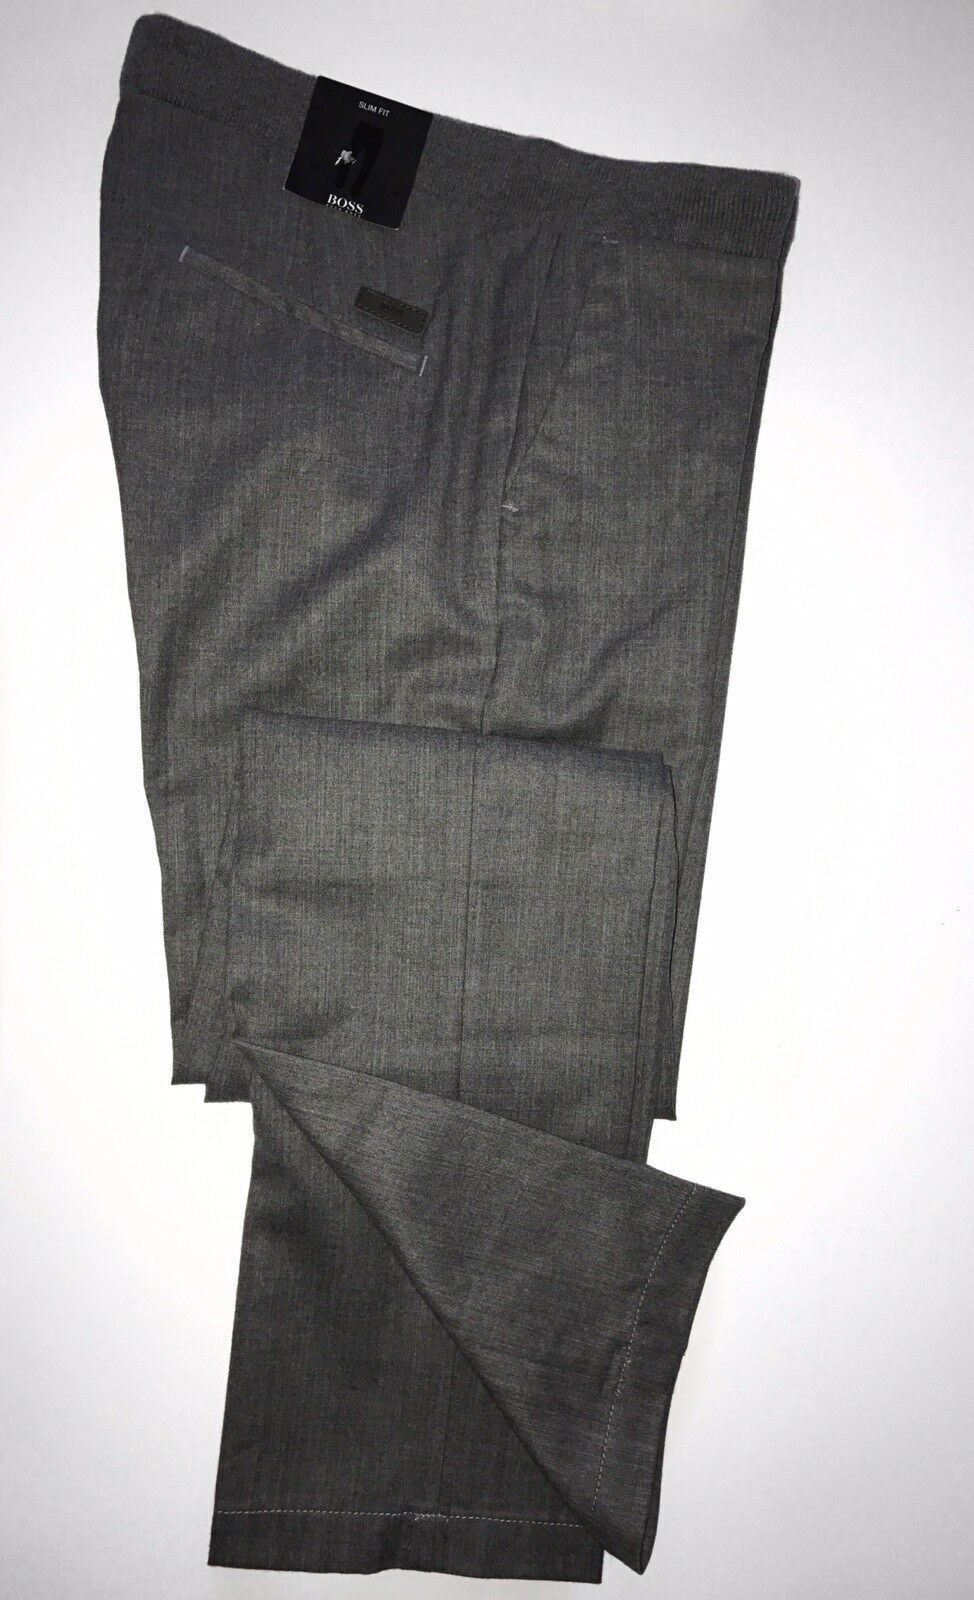 Boss Hugo Boss Rice2 Mens Wool Dark Gray Dress Pants Size 36R US